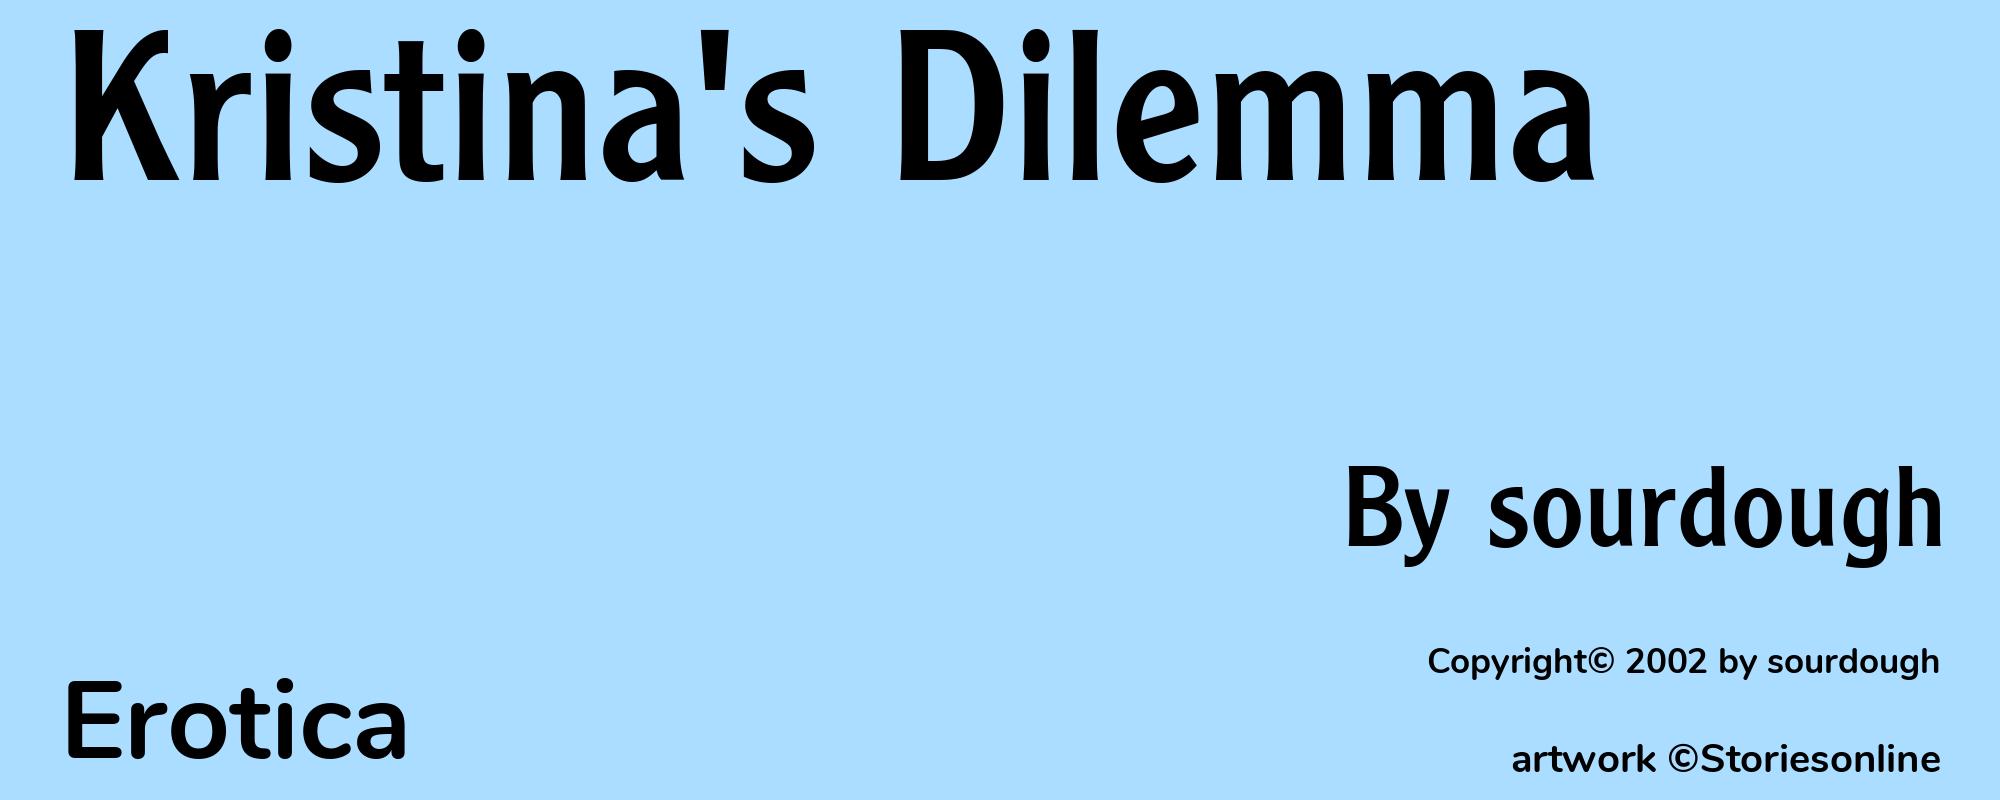 Kristina's Dilemma - Cover